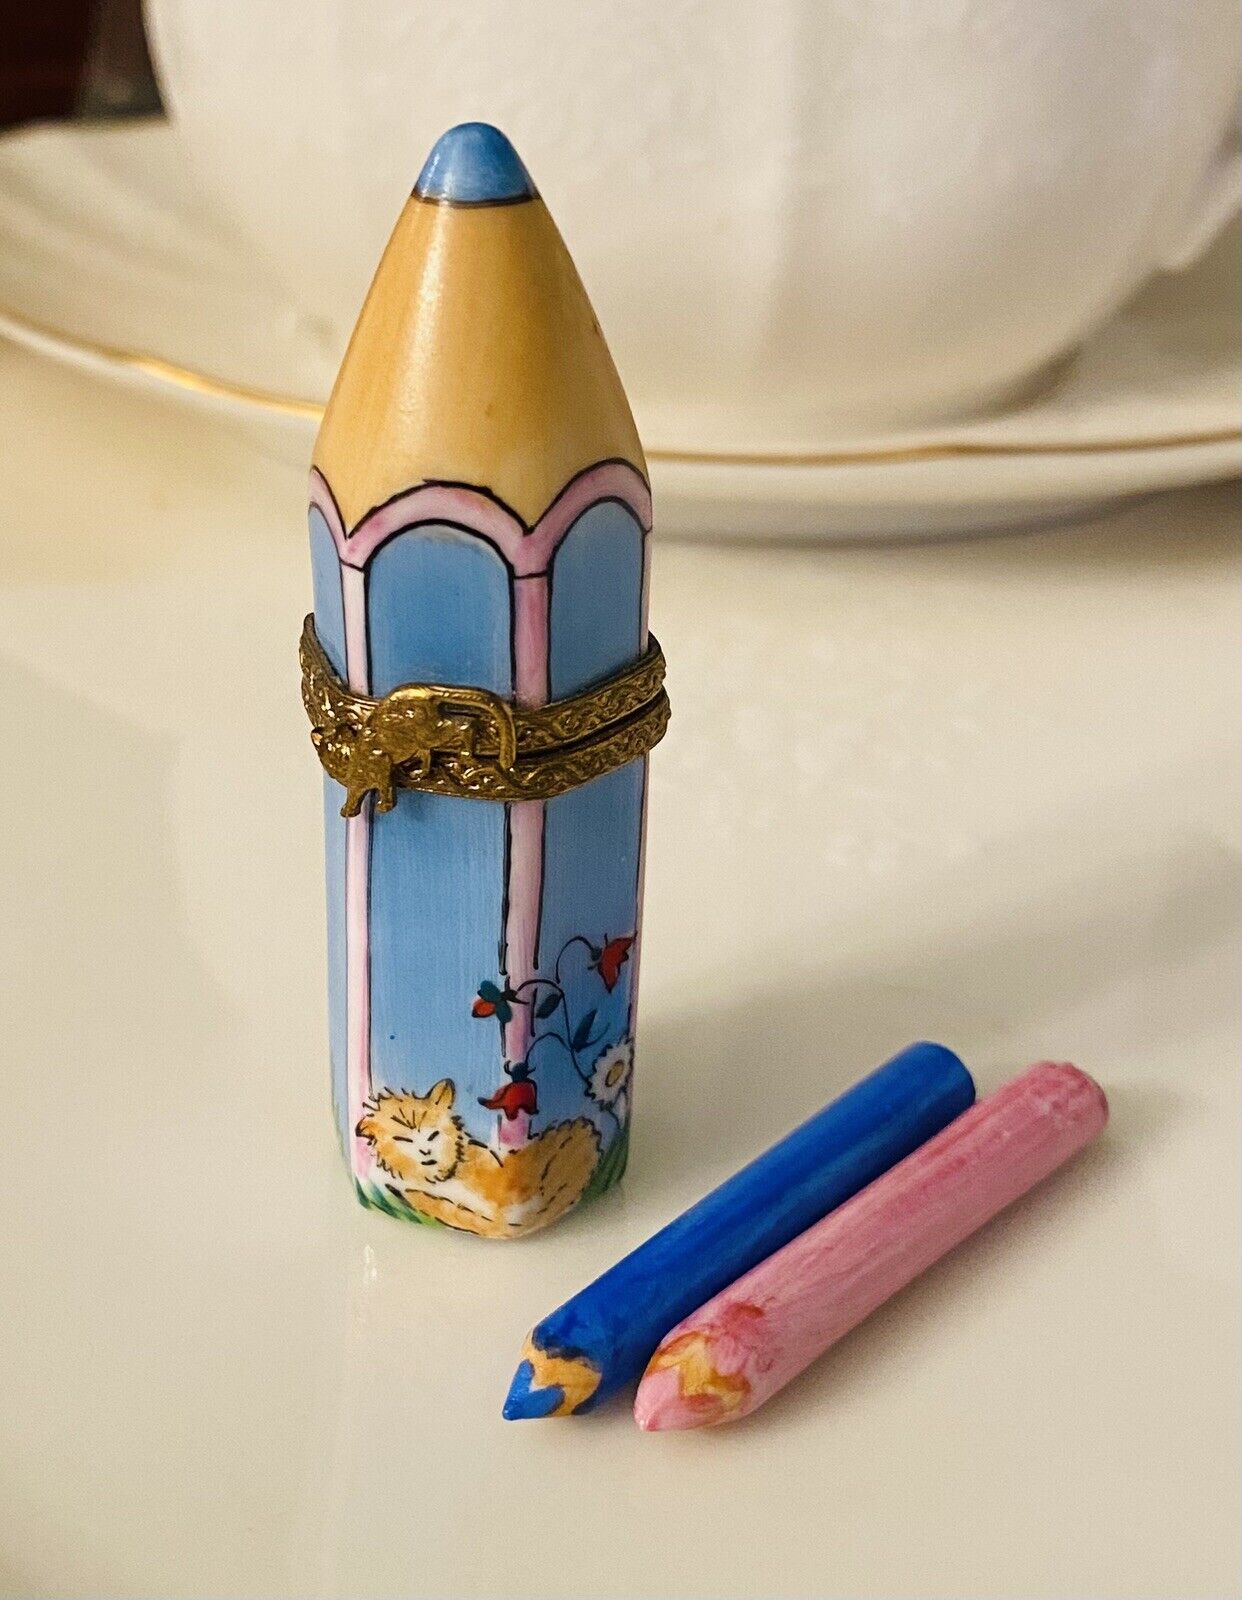 Limoges Trinket Box - Colored Pencils Inside - Cat Design - Peint Main